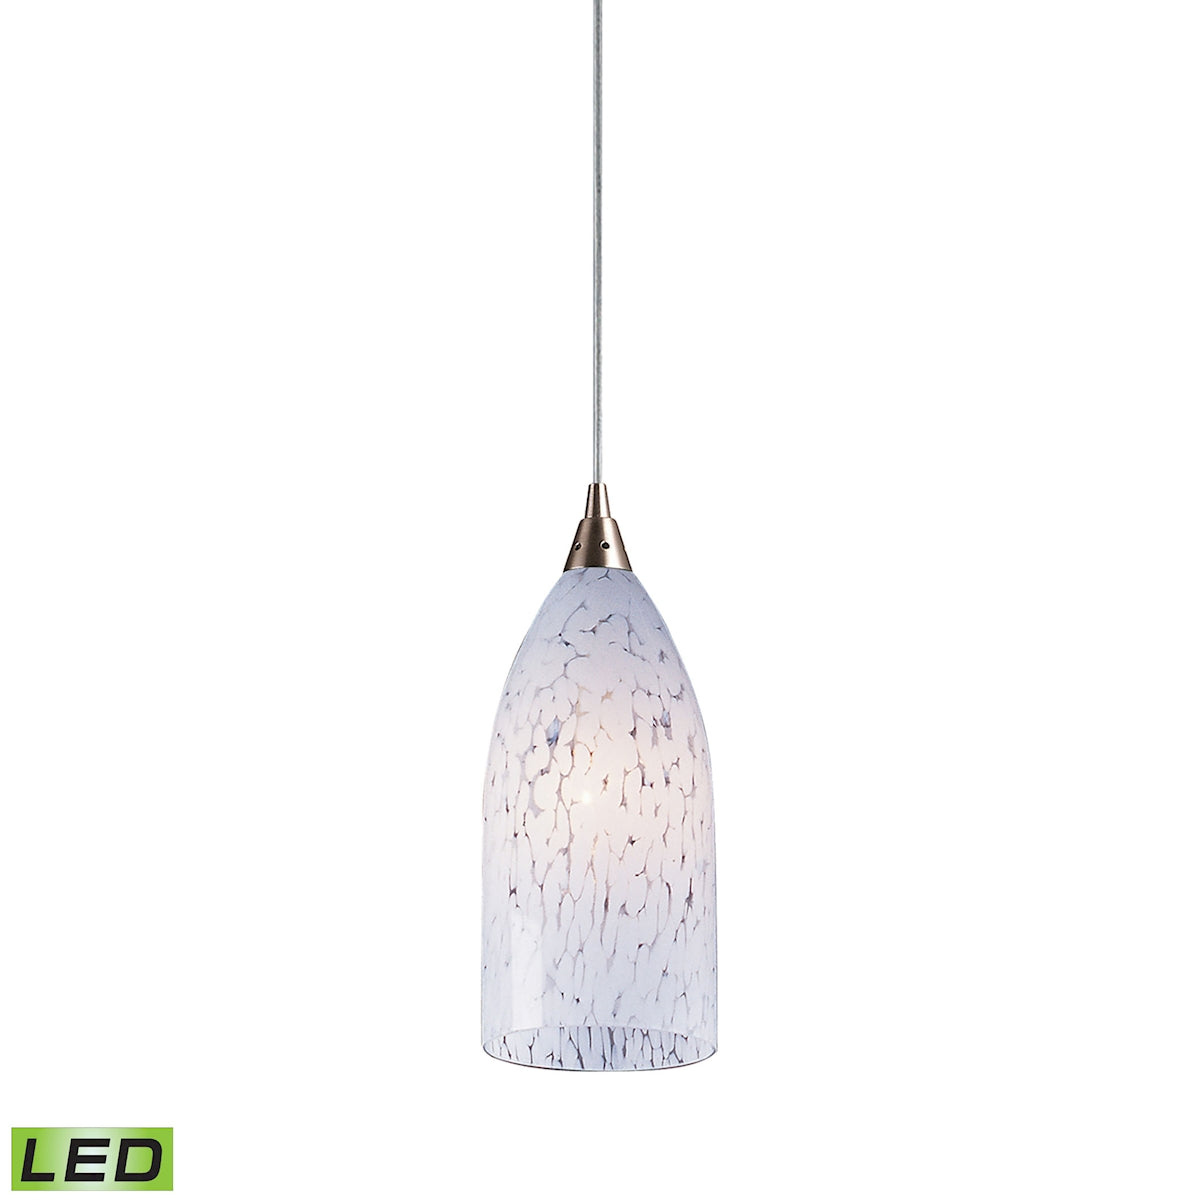 ELK Lighting 502-1SW-LED Verona 1-Light Mini Pendant in Satin Nickel with Snow White Glass - Includes LED Bulb